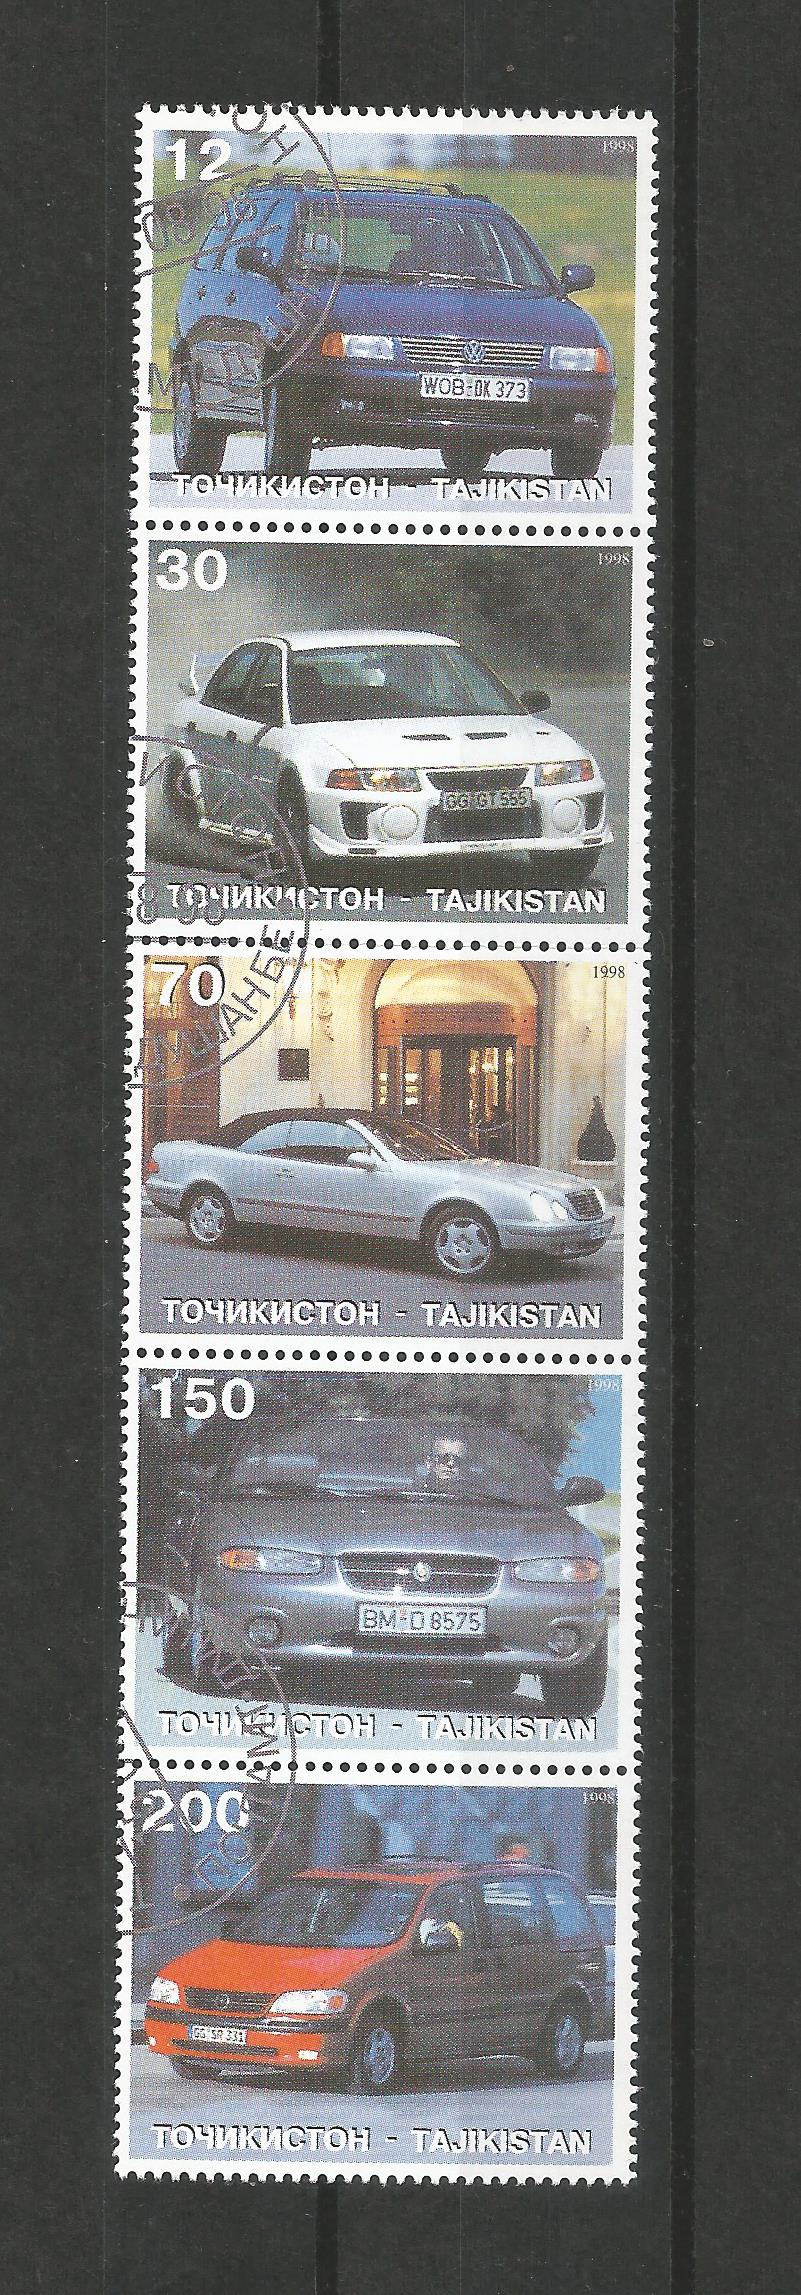 51261 - TAGIKISTAN - 1998 - Automobili - 5 val. timbrati - (TAJ001)